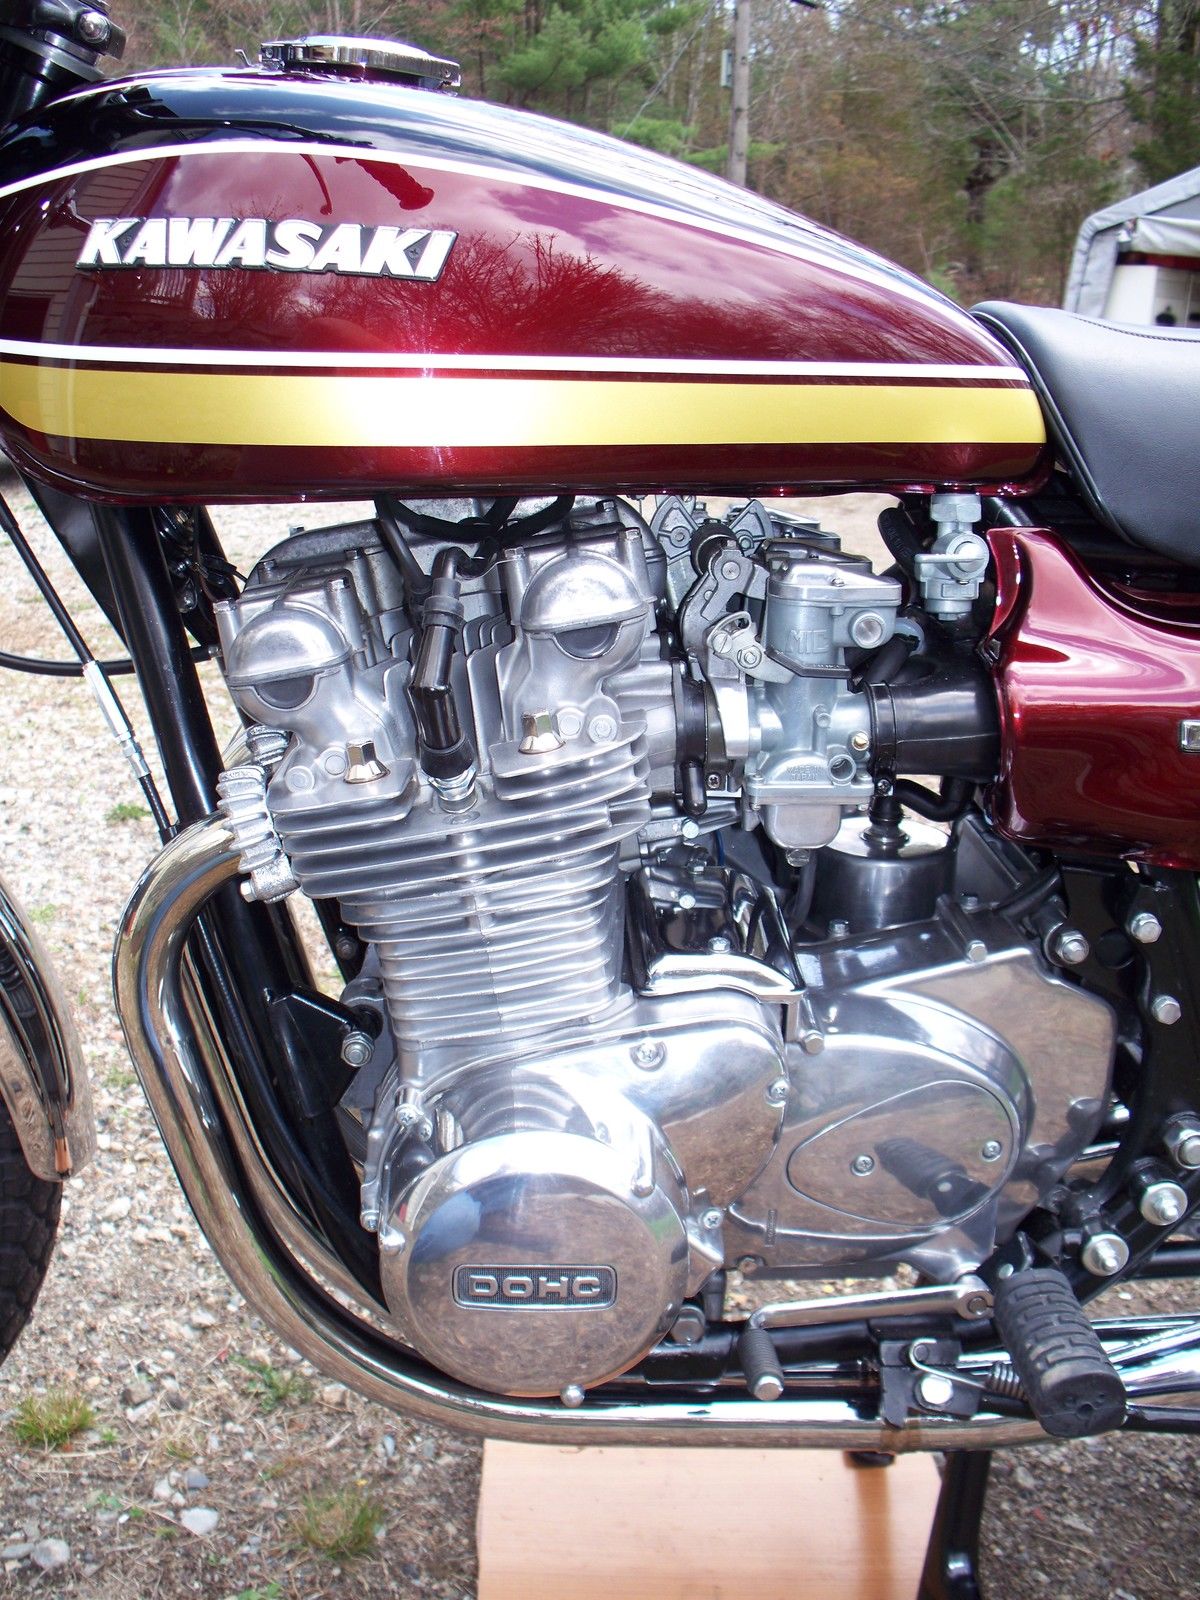 Kawasaki Z1 - 1975 - Carburettors, Kawasaki Badge, Alternator Cover, Sprocket Cover, Fuel Tap and Gear Change.